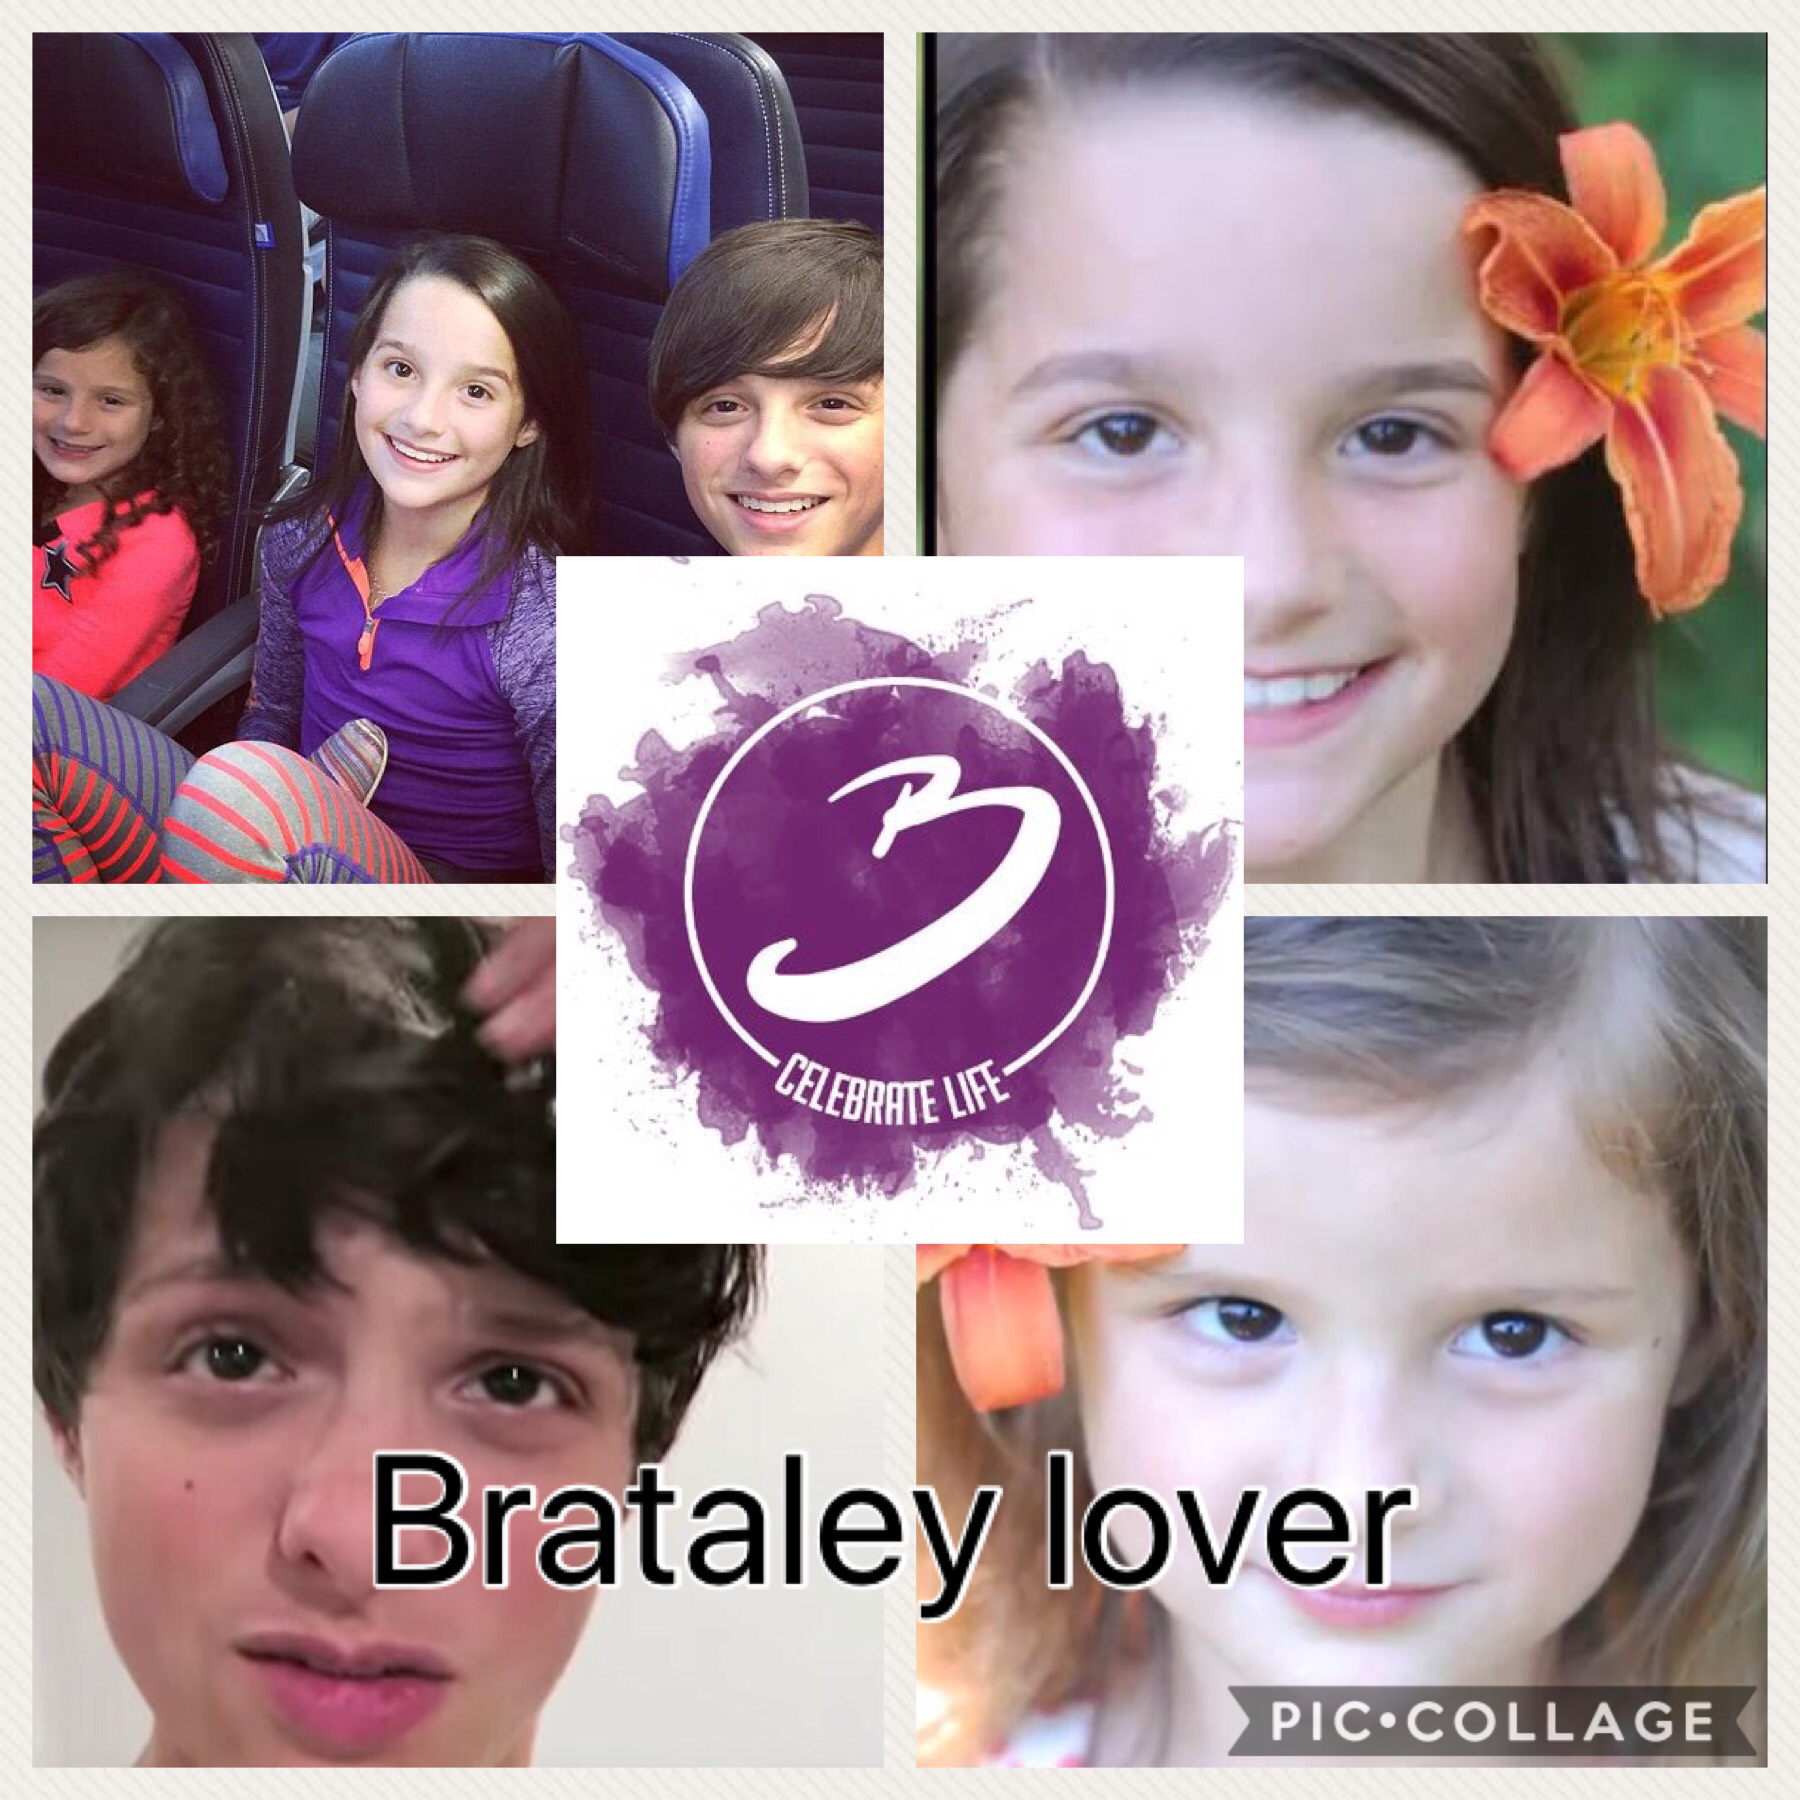 Brataley lover